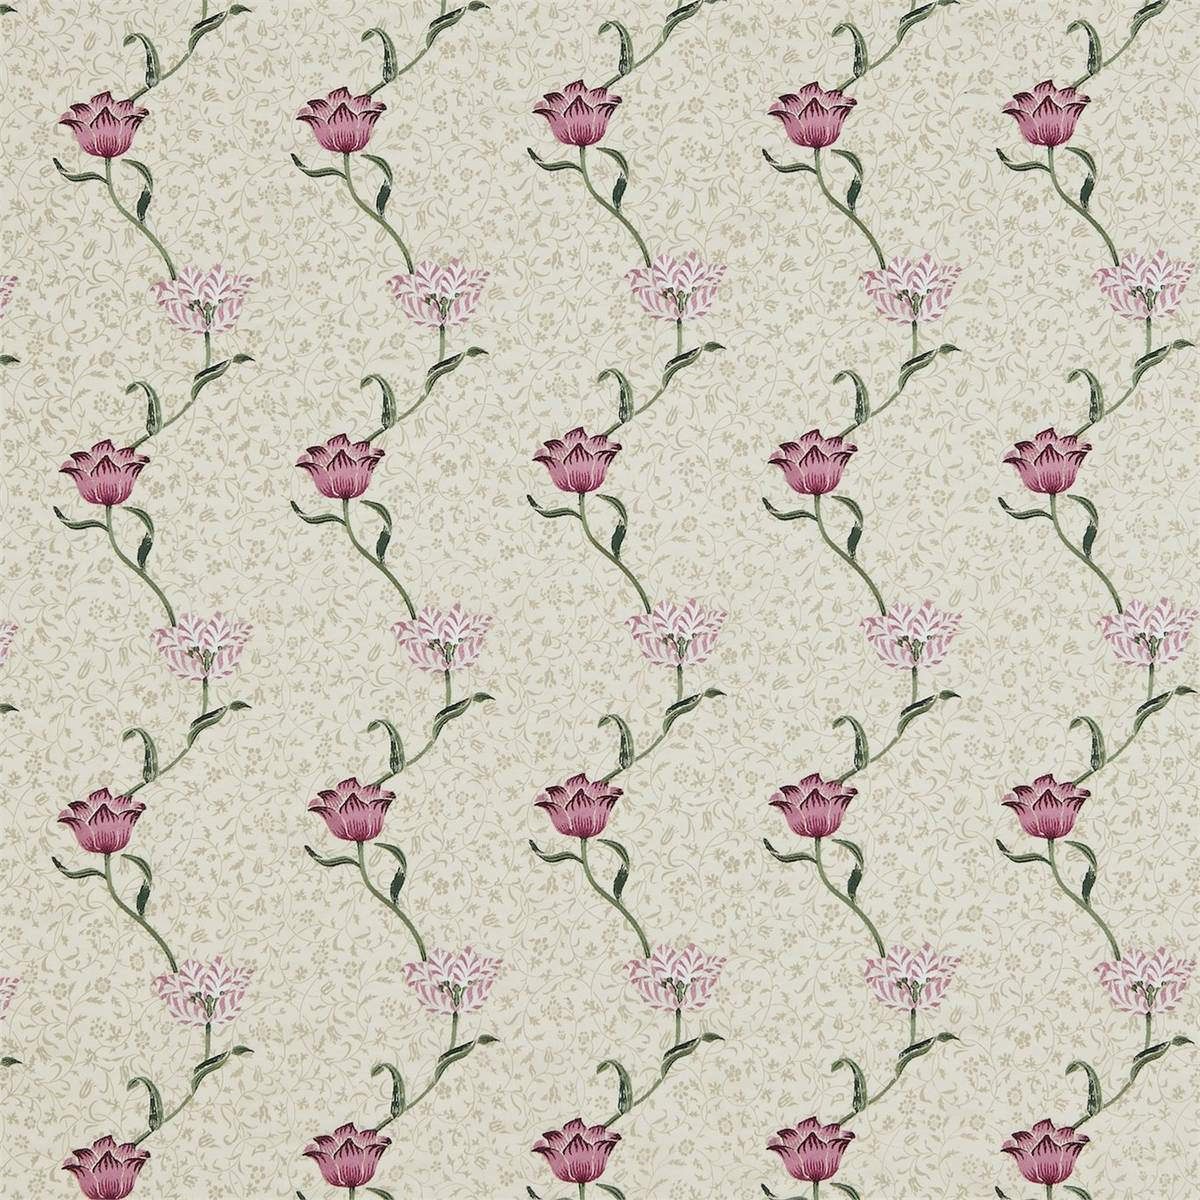 Garden Tulip Rose/Bayleaf Fabric by William Morris & Co.